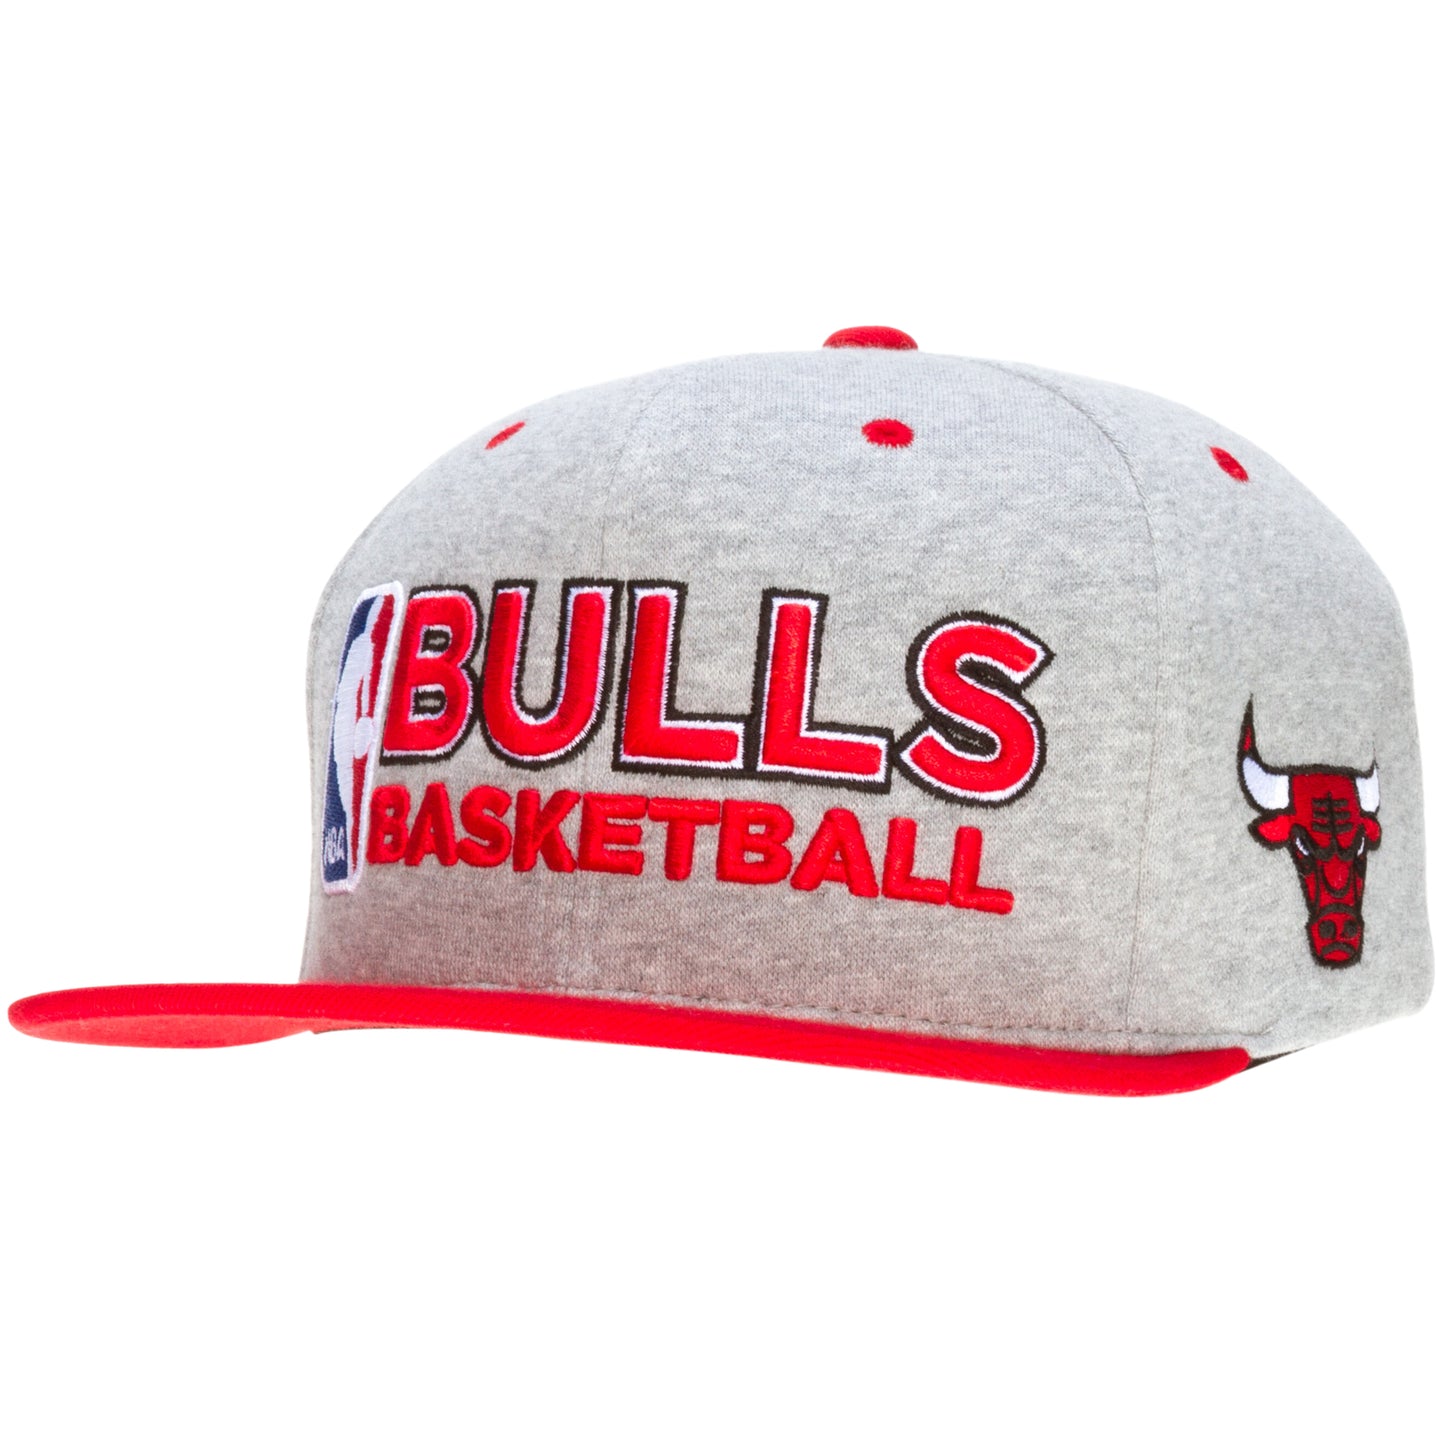 Chicago Bulls Grey and Red "Bulls Basketball" Snapback